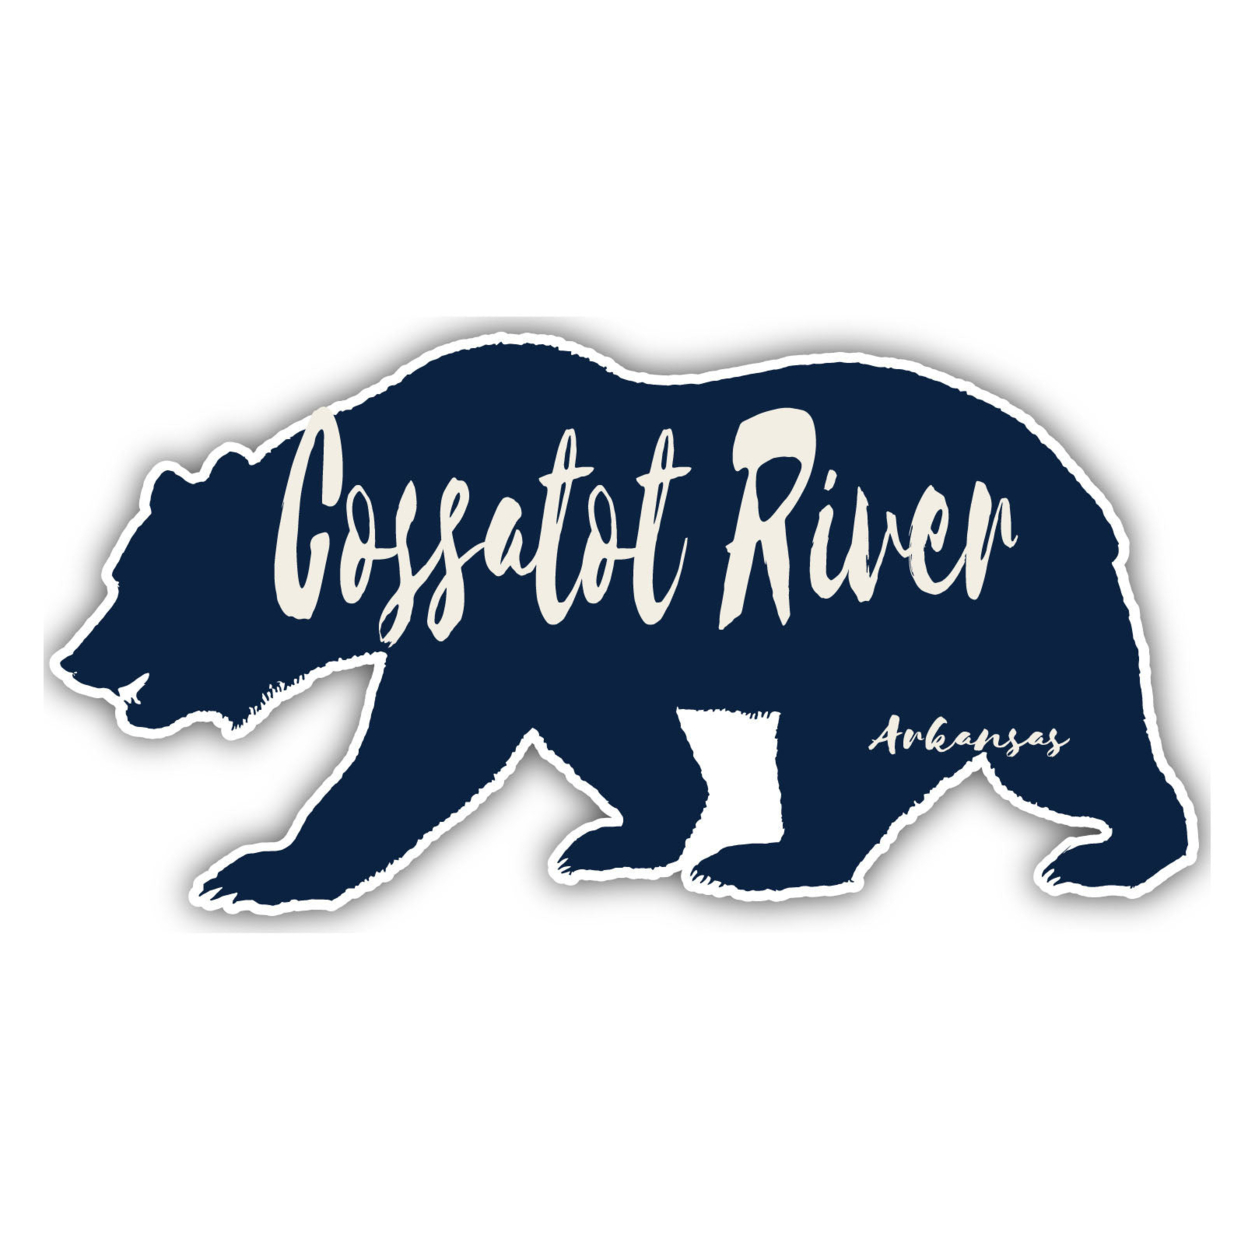 Cossatot River Arkansas Souvenir Decorative Stickers (Choose Theme And Size) - 4-Pack, 2-Inch, Bear